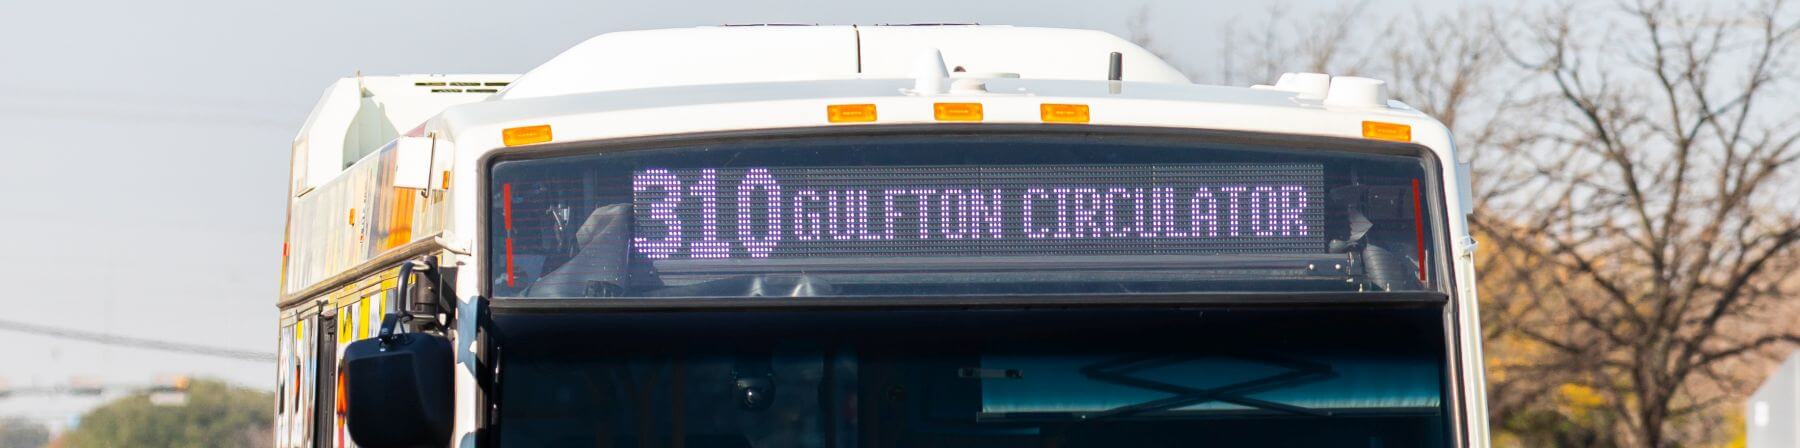 310 Gulfton Circulator bus